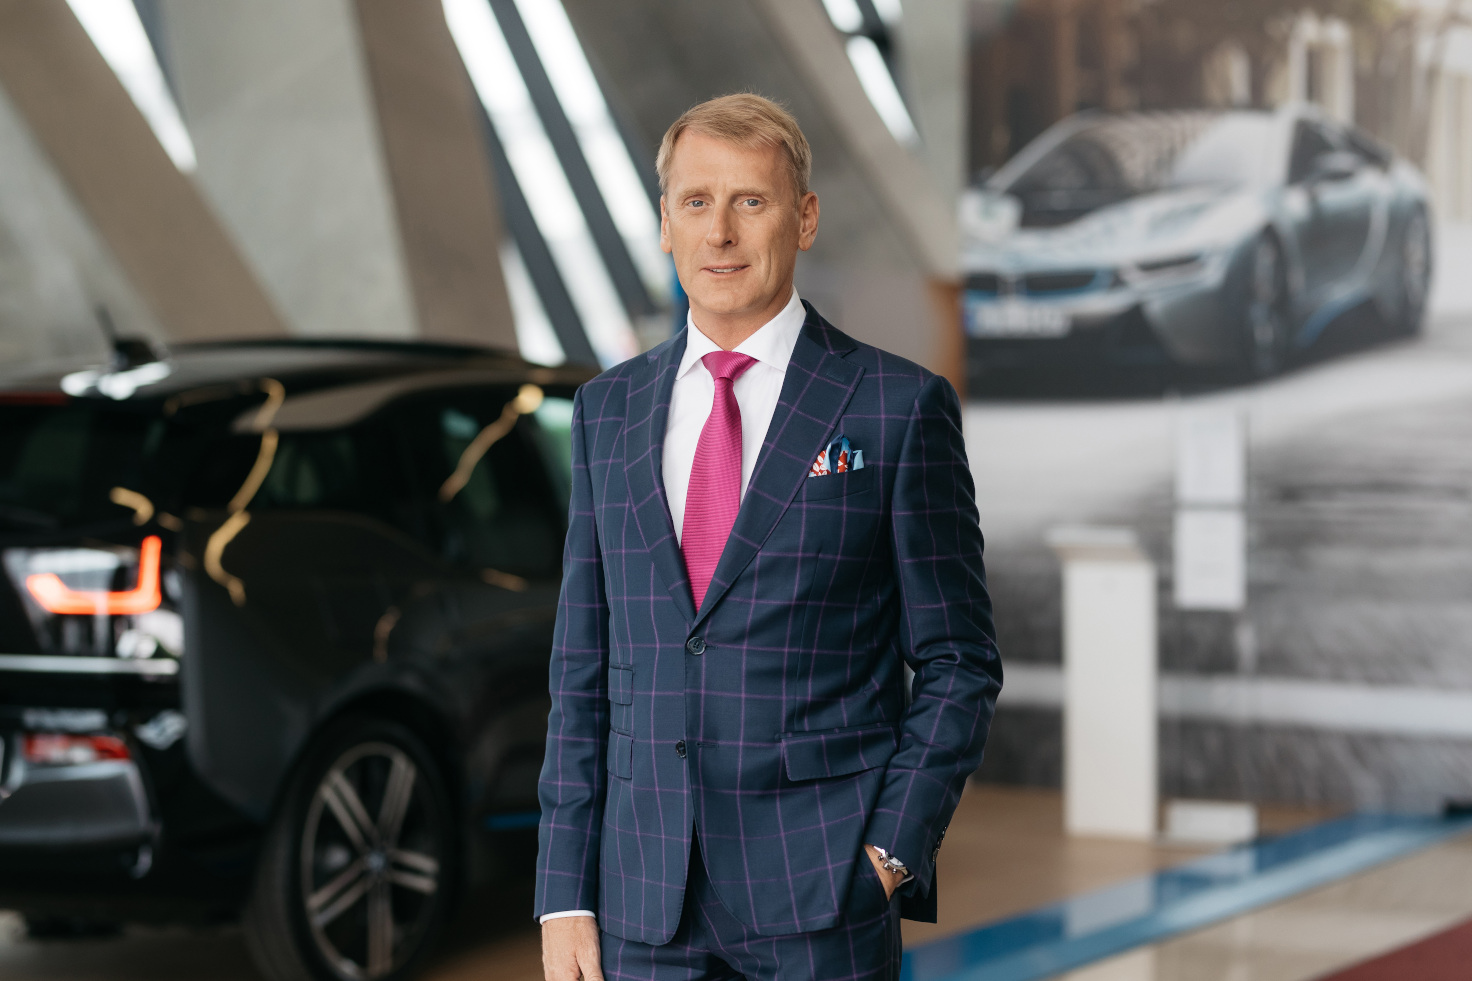 Maciej Galant, Former Managing Director, BMW Group Hungary